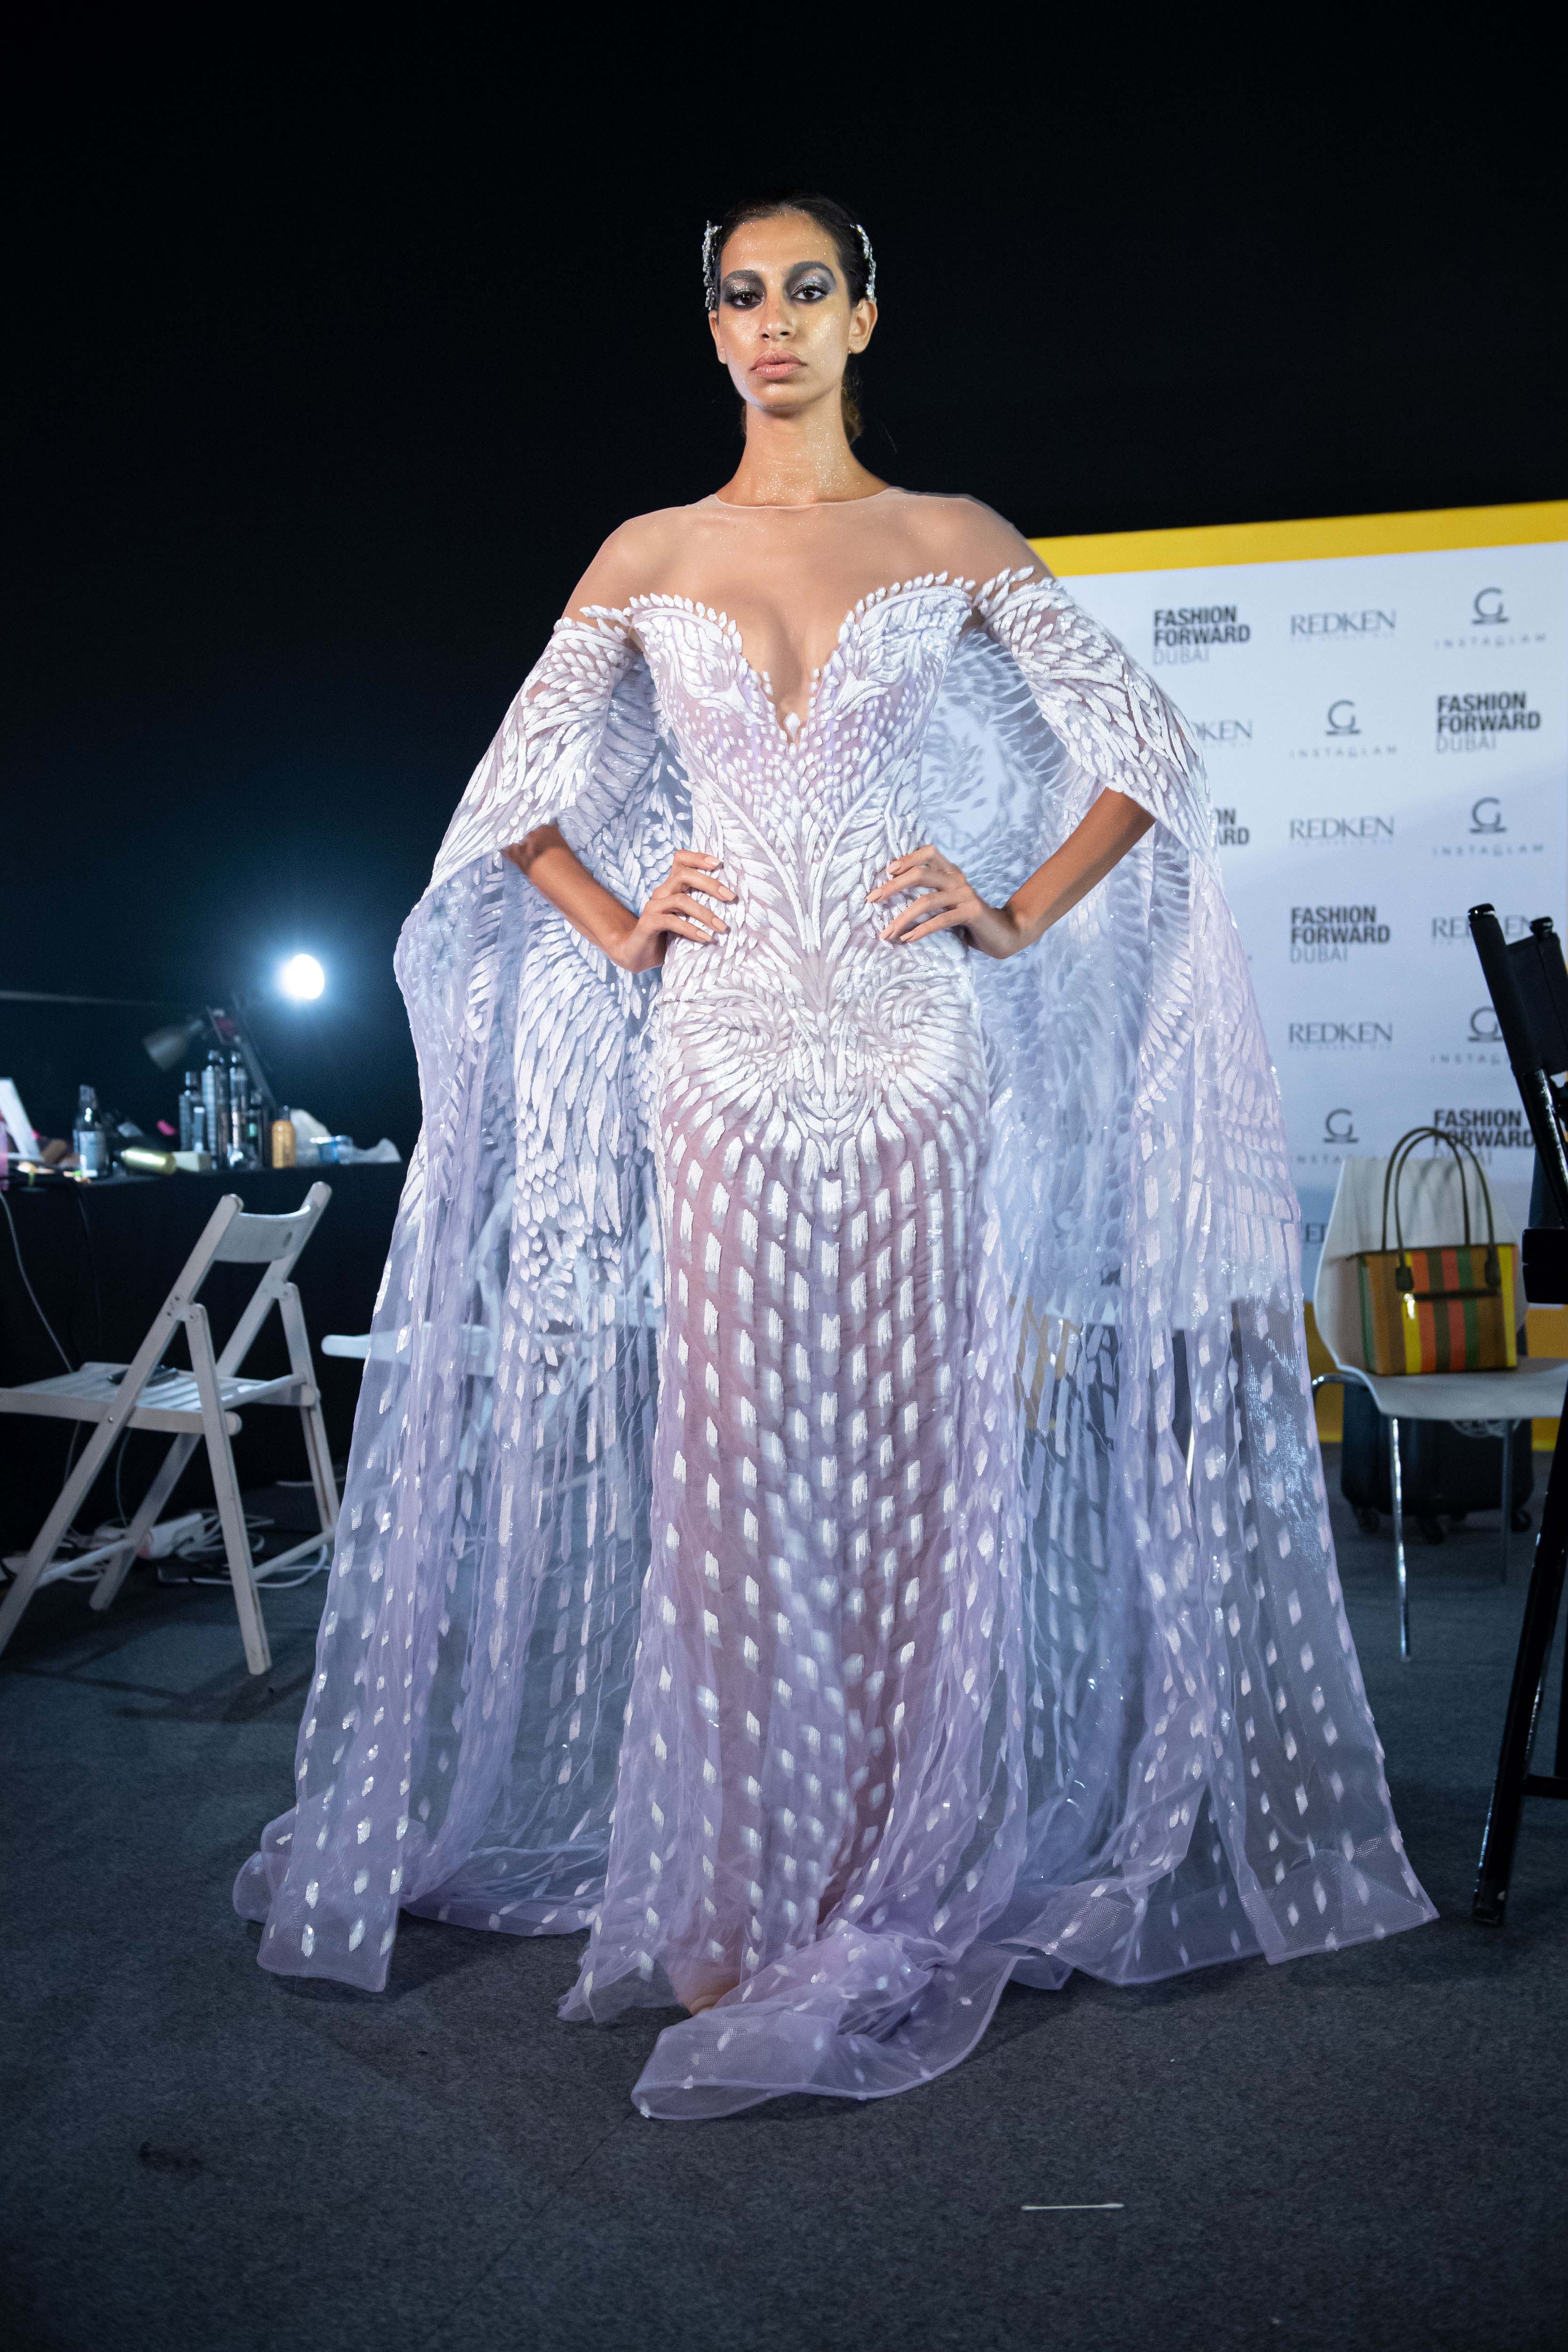 Arab models Gigi, Bella Hadid grace the runway for French label